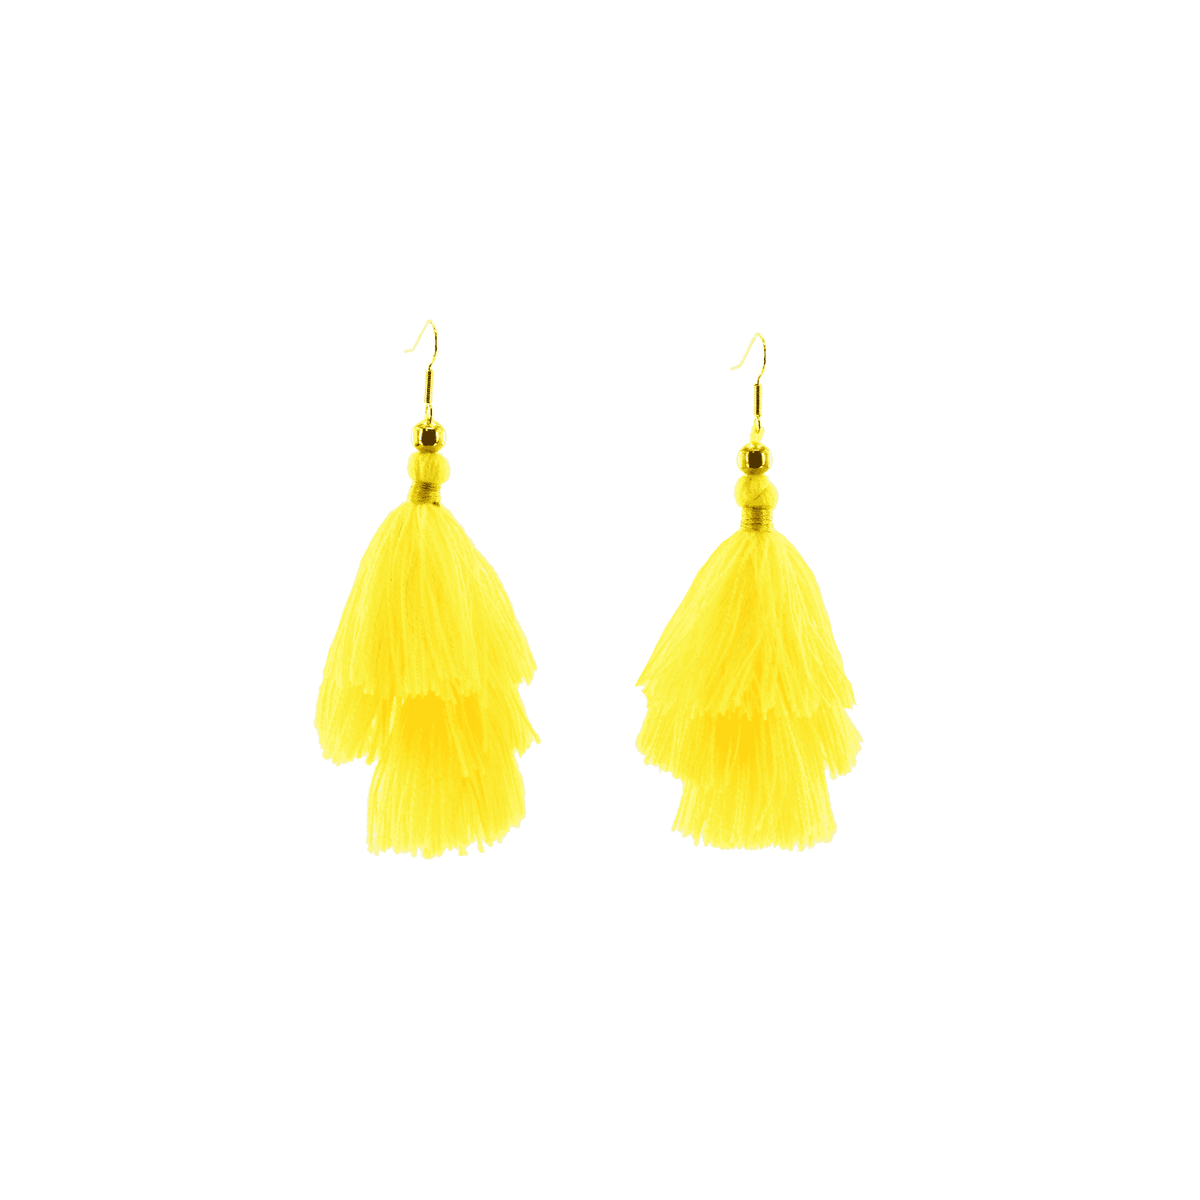 Triple Tassel Earrings in Yellow - Josephine Alexander Collective